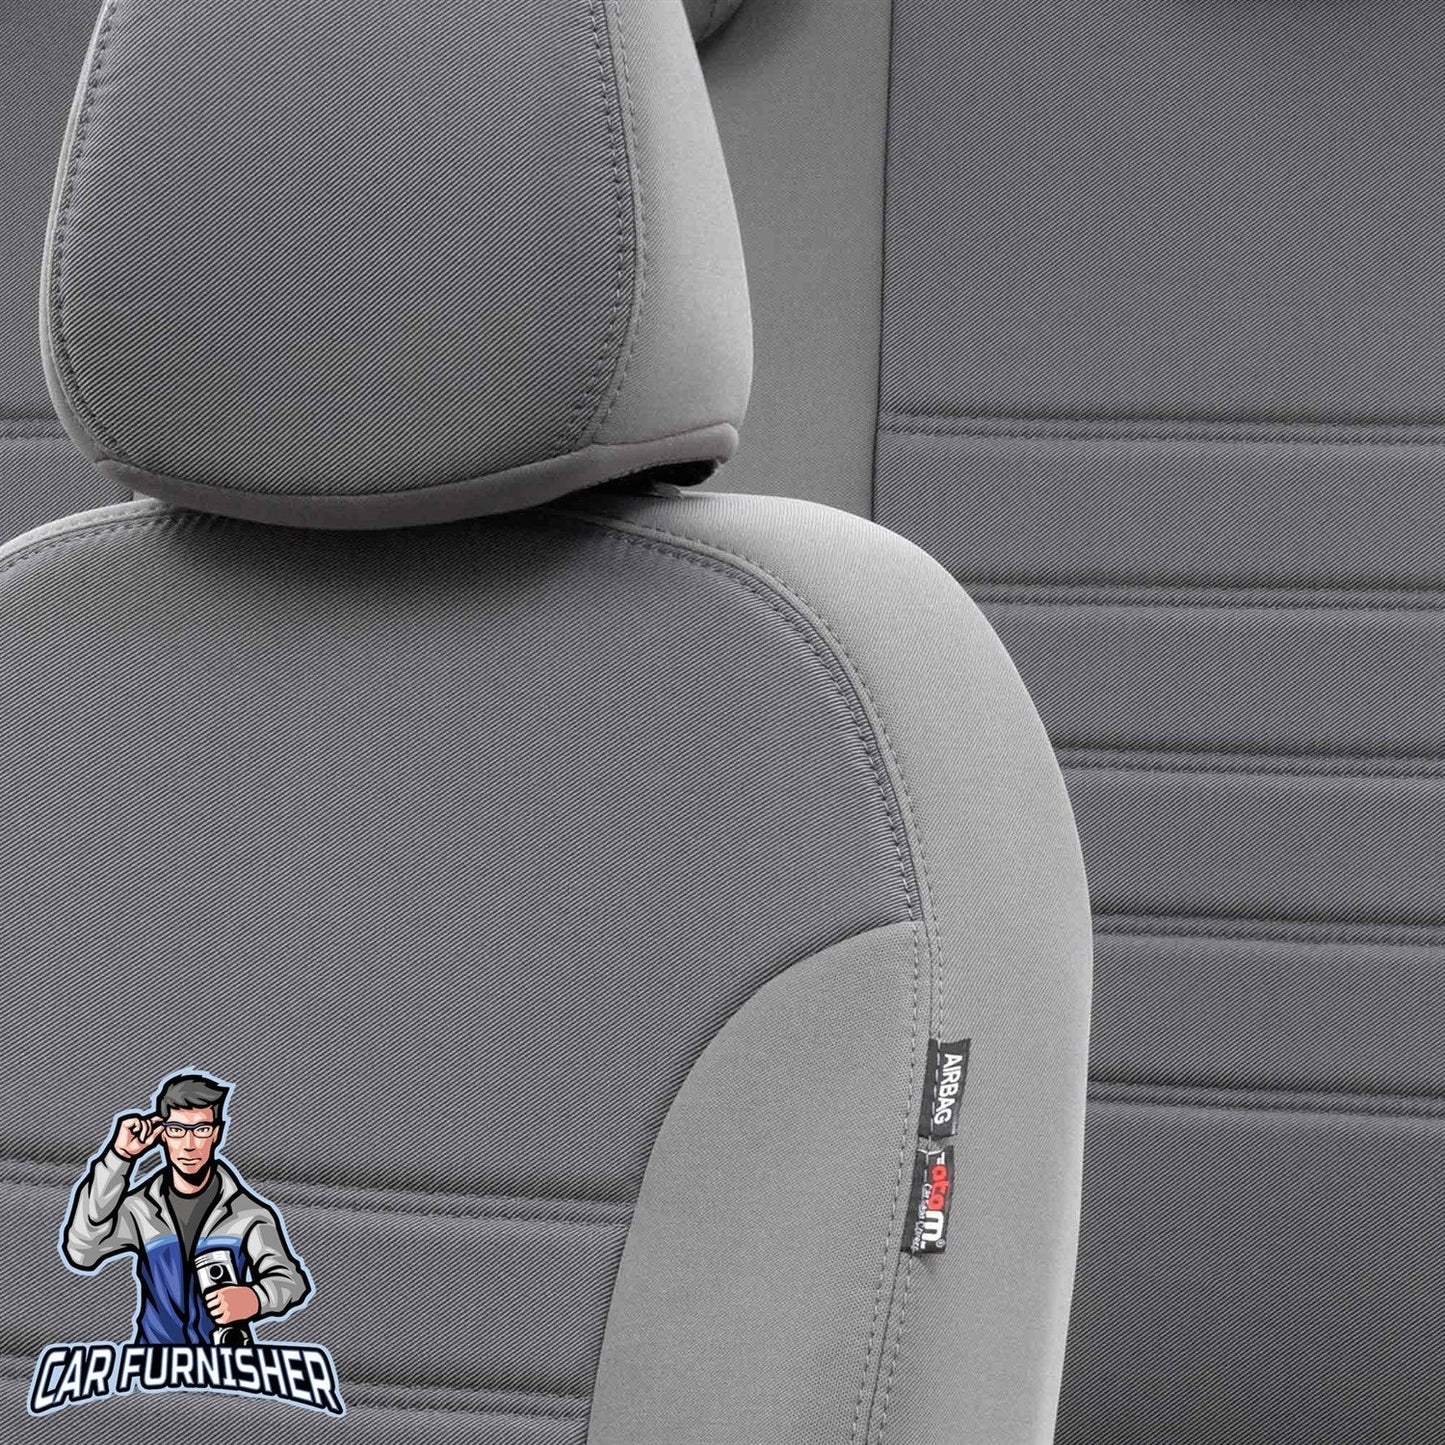 Fiat Marea Seat Covers Original Jacquard Design Gray Jacquard Fabric